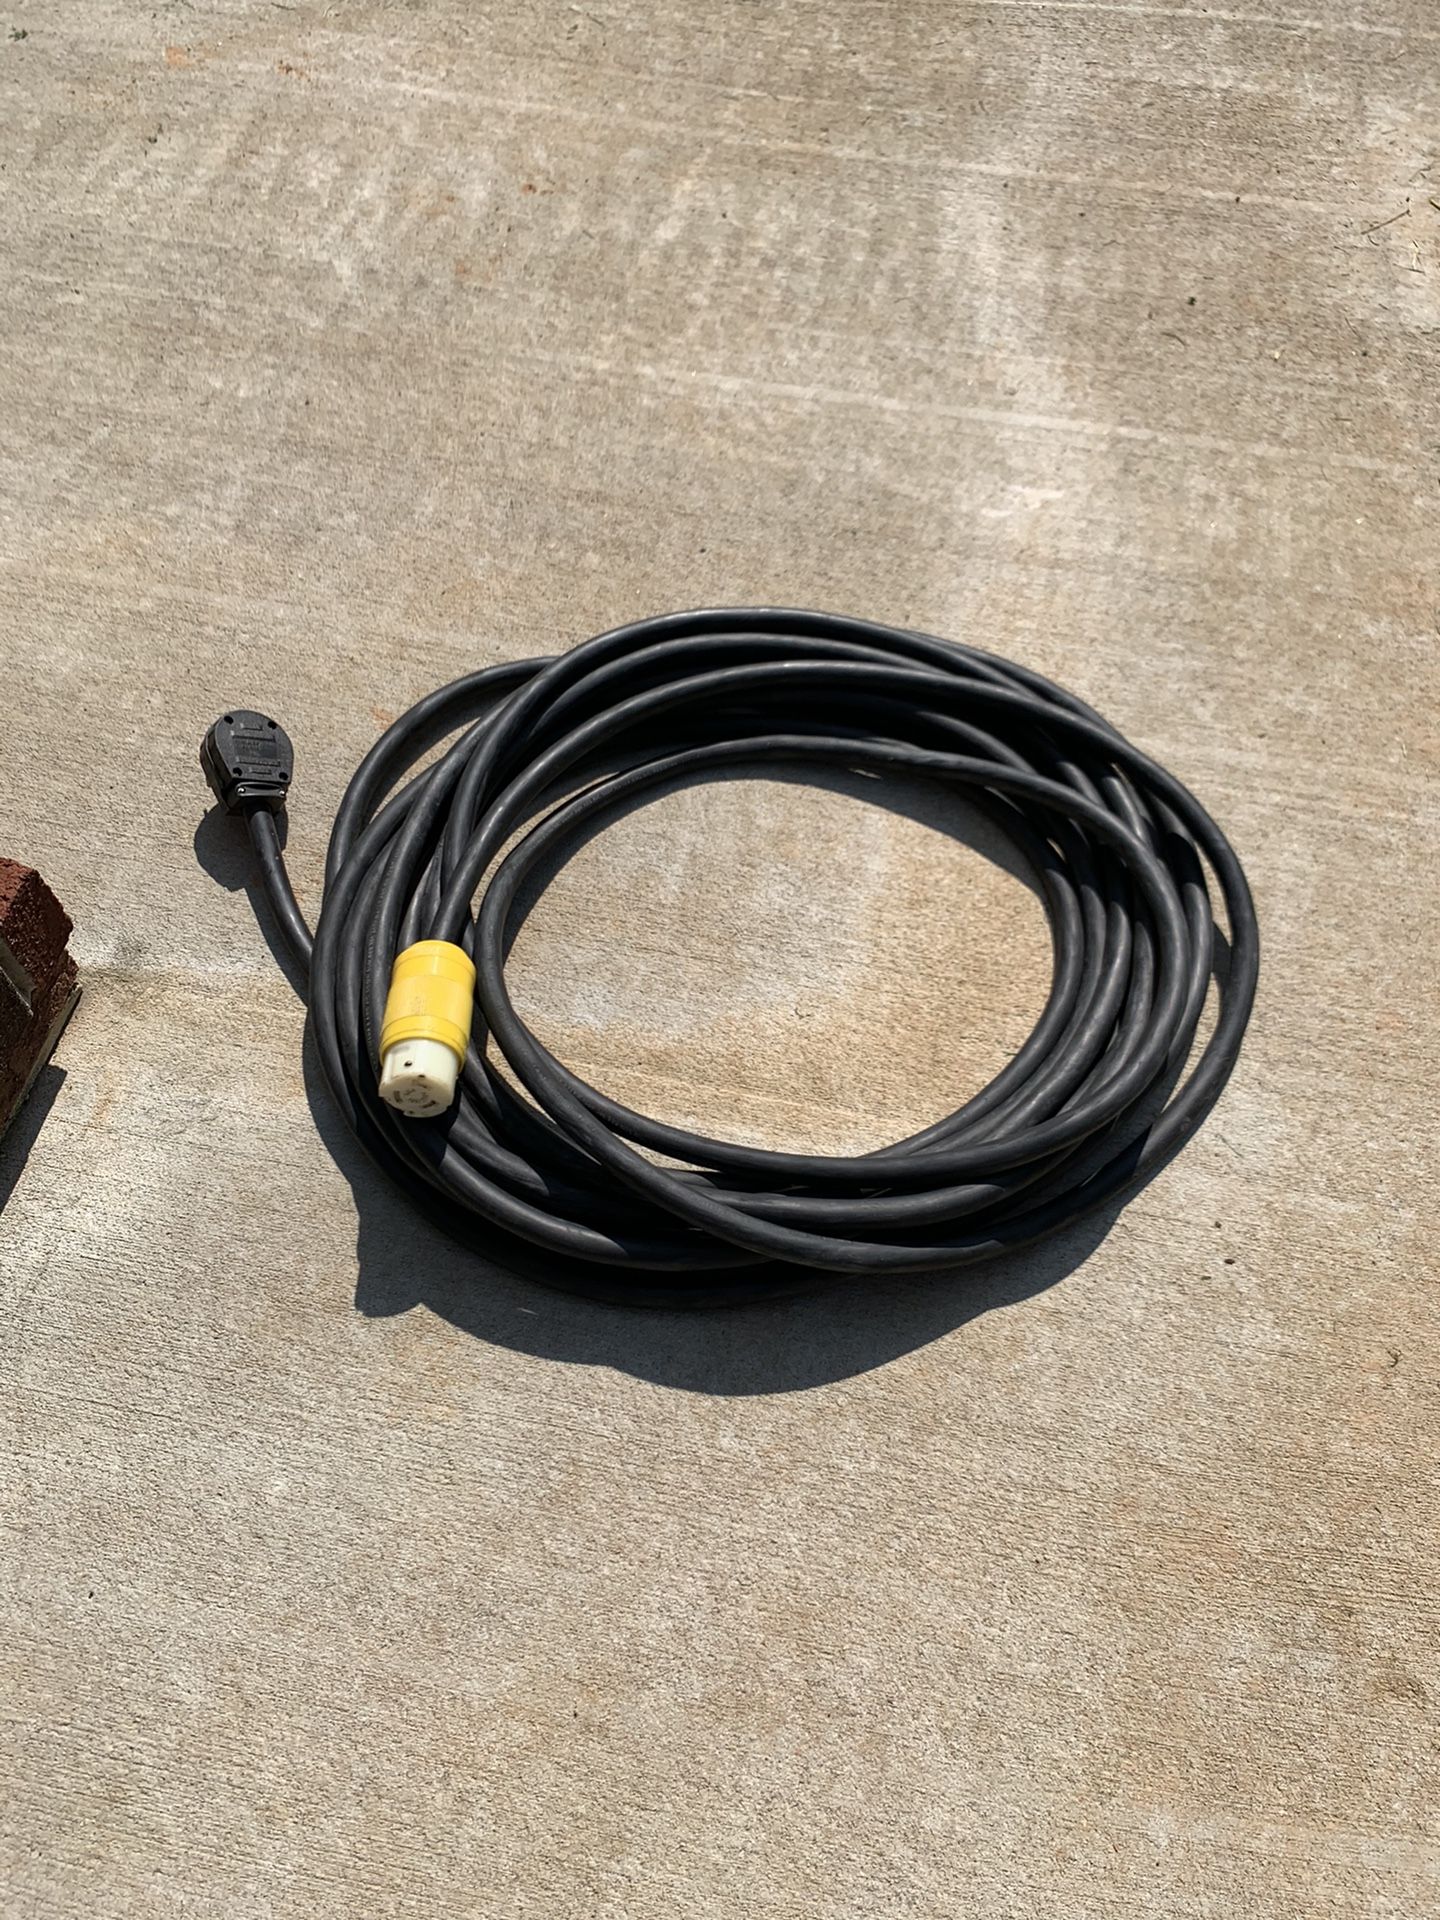 60ft RV cord 50amp plug